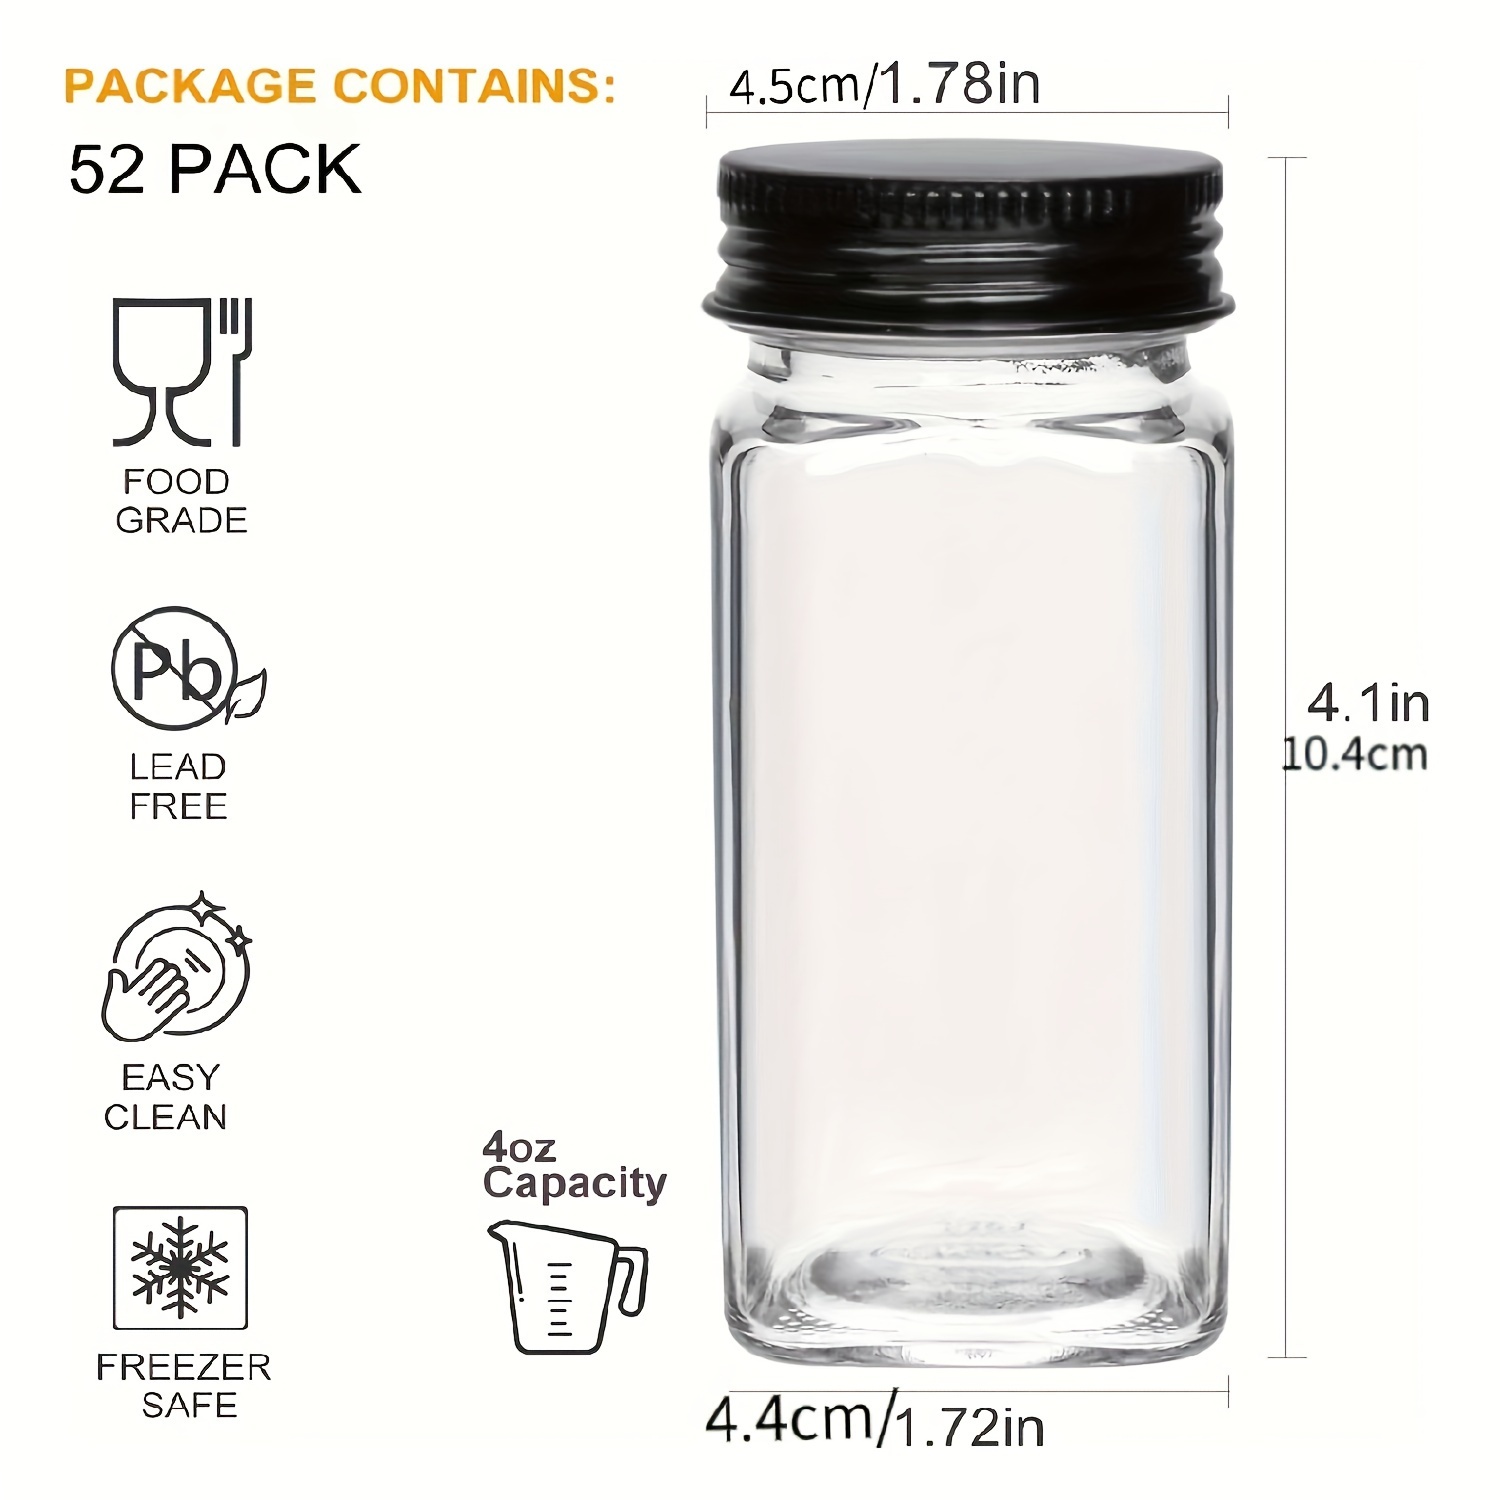 Glass Spice Jars/Bottles/Shakers 4 Oz Empty Square Spice